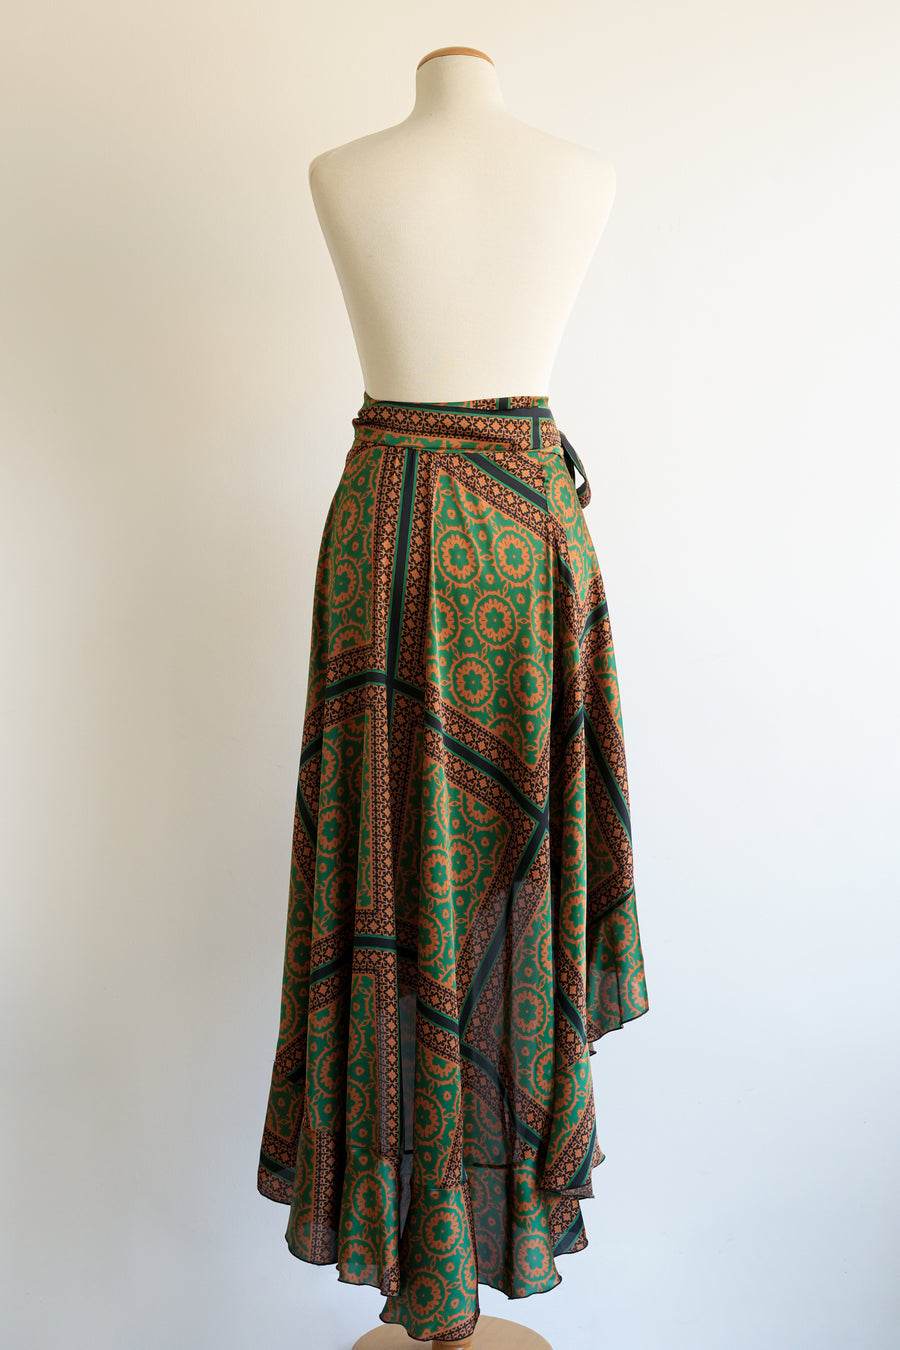 Manifesto wrap multiform skirt (satin print)